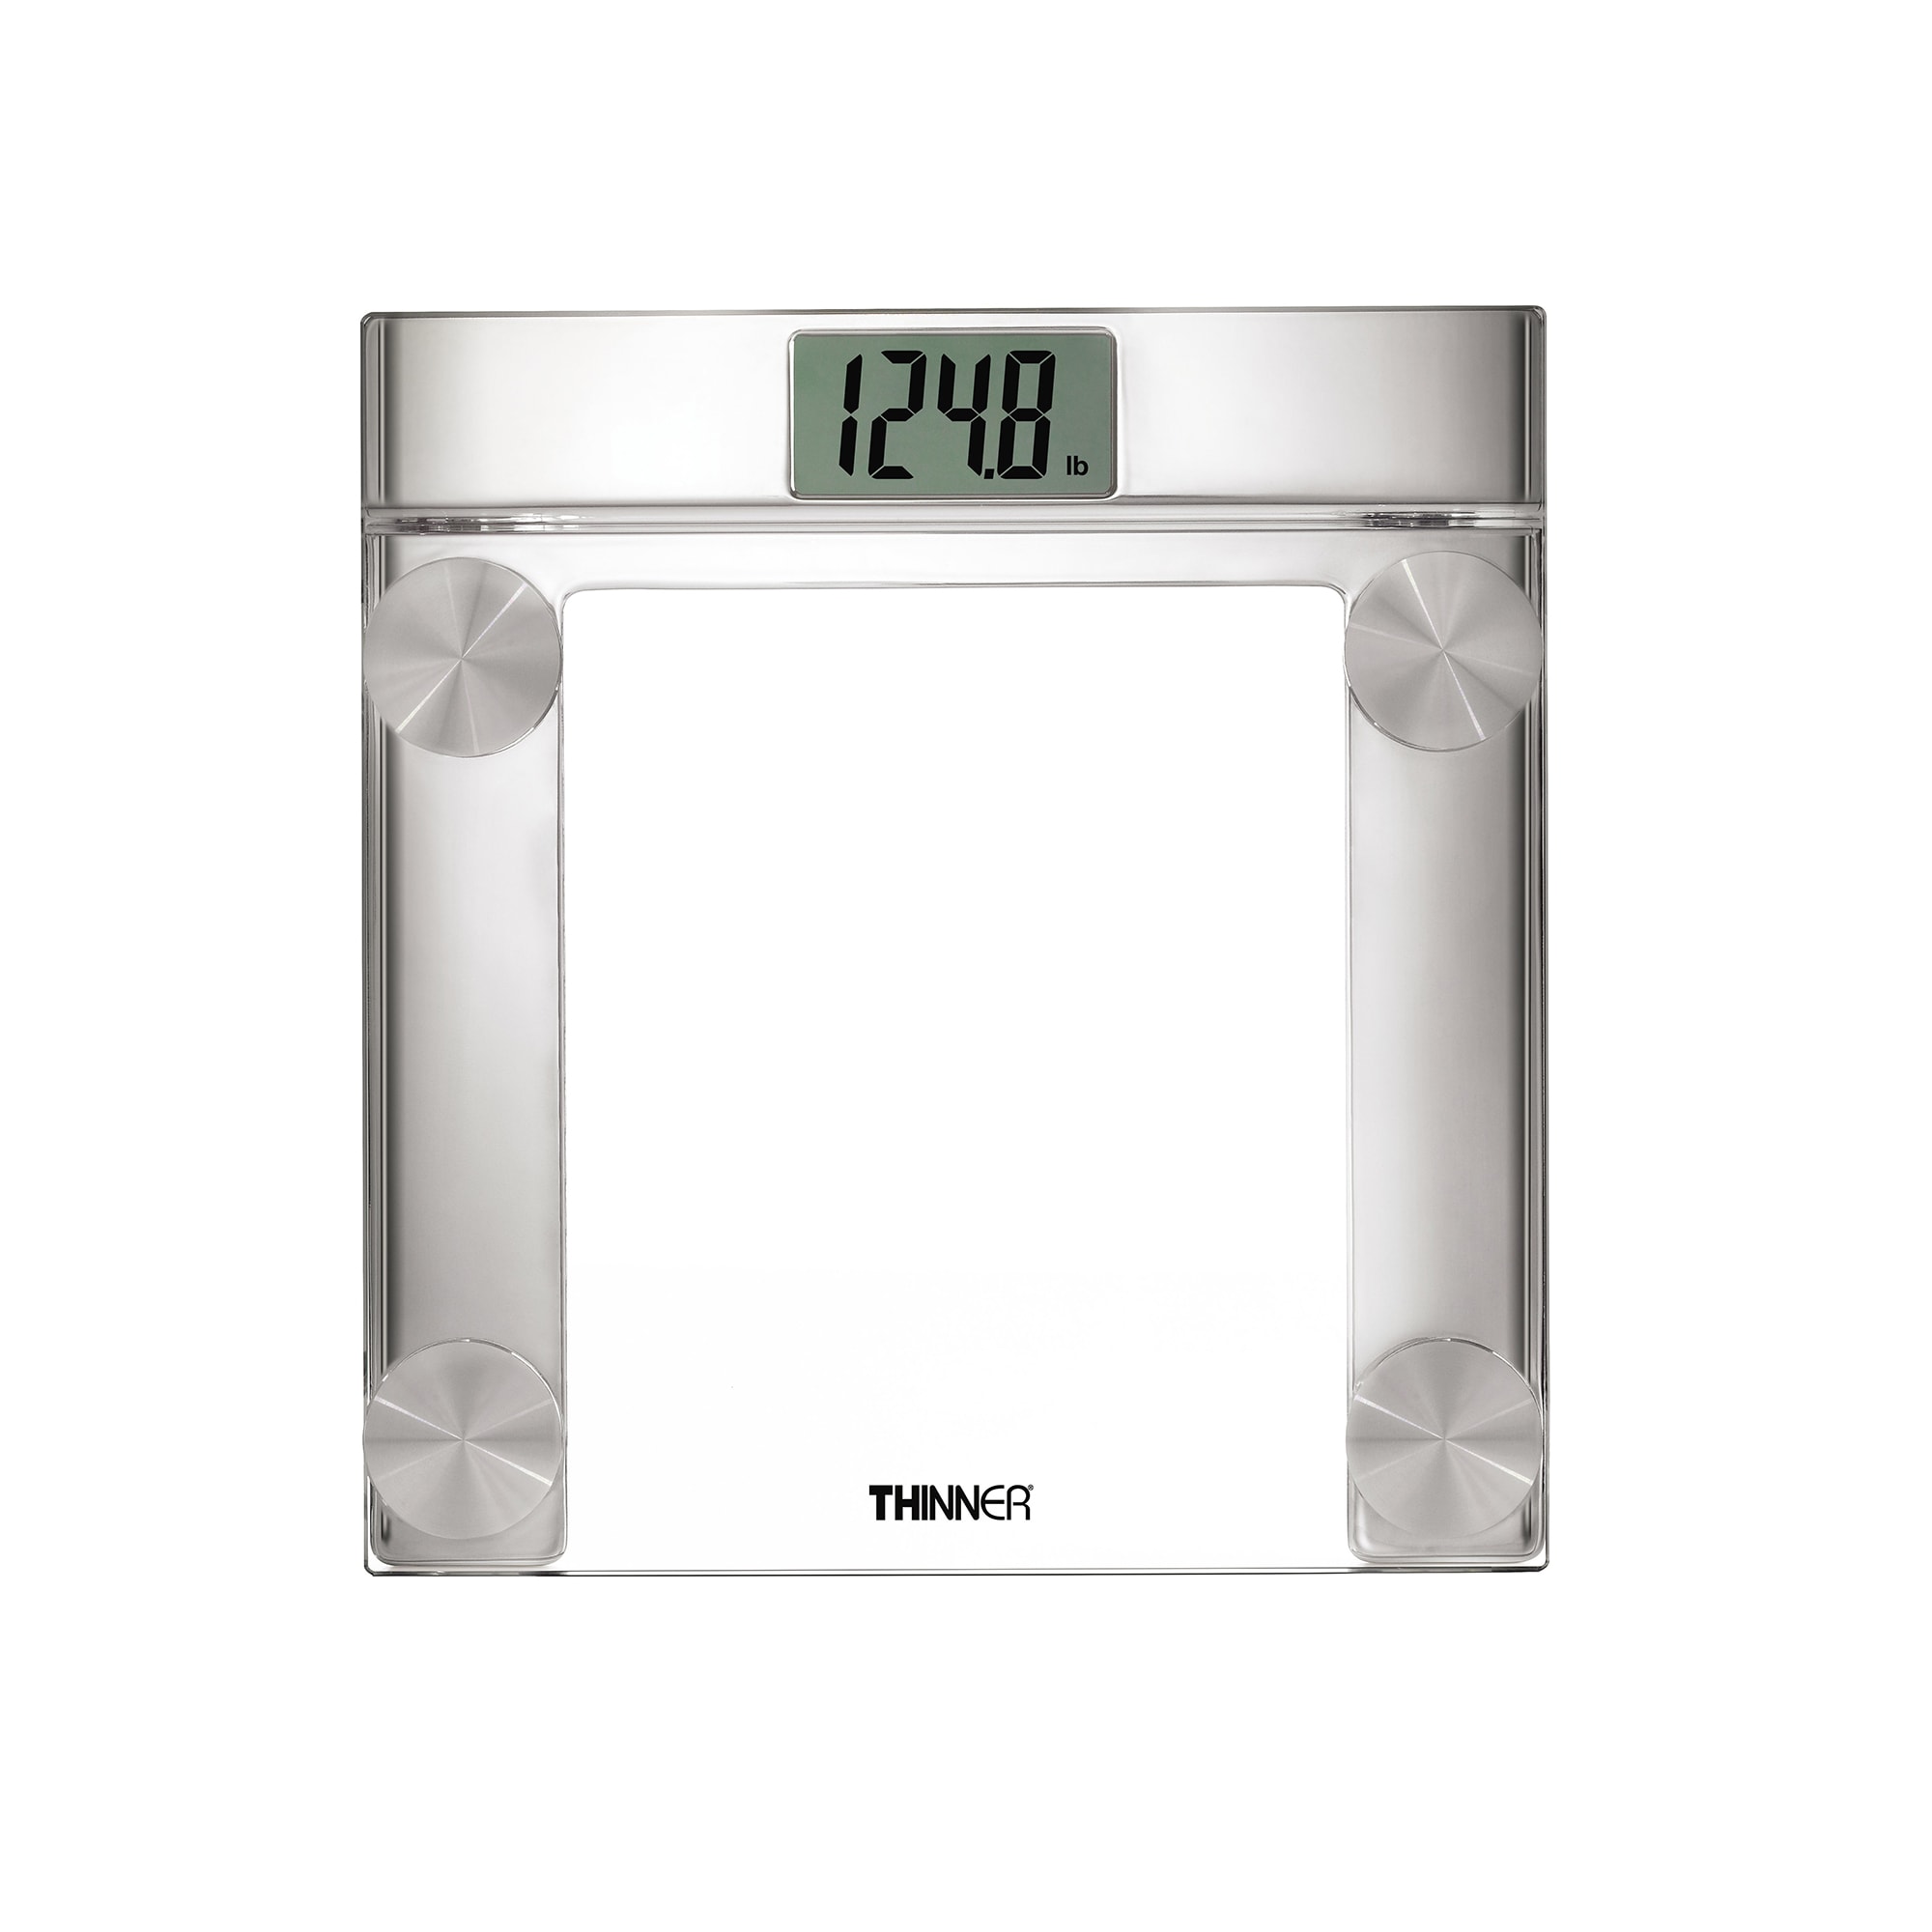 Taylor Brushed Stainless Steel Digital Bathroom Scale